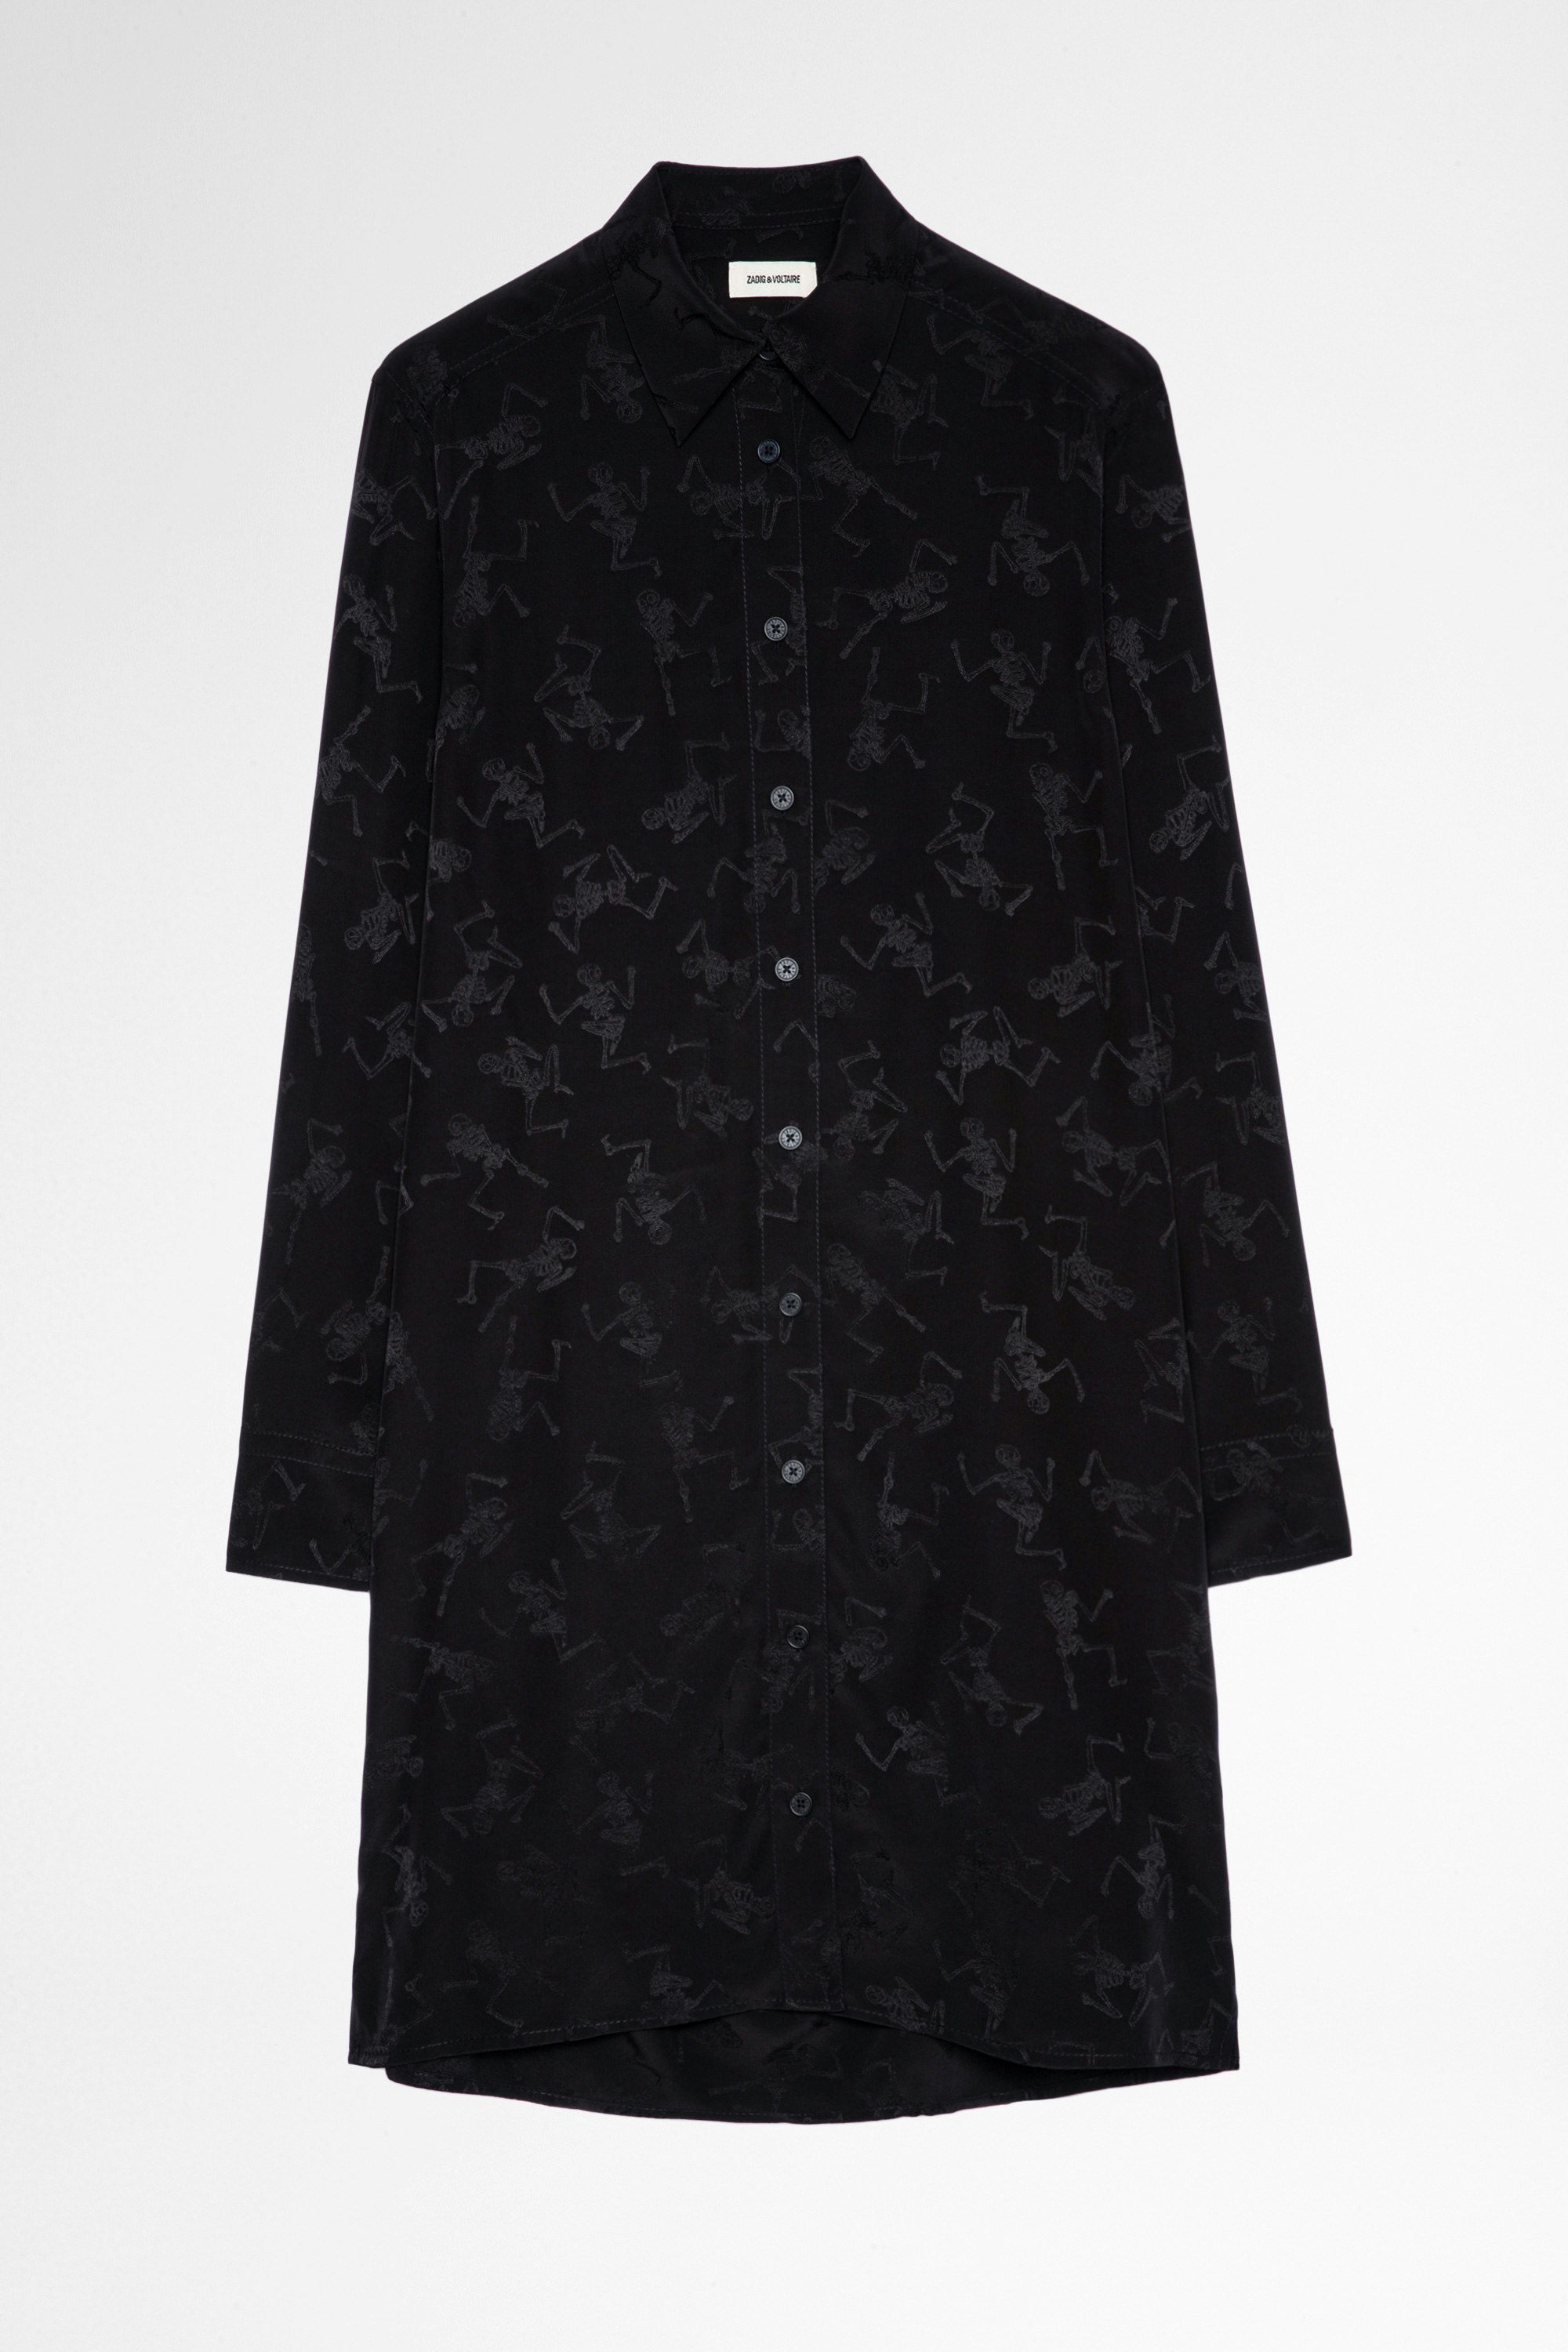 Rais Dress Silk Women's black shirt dress with jacquard skeleton